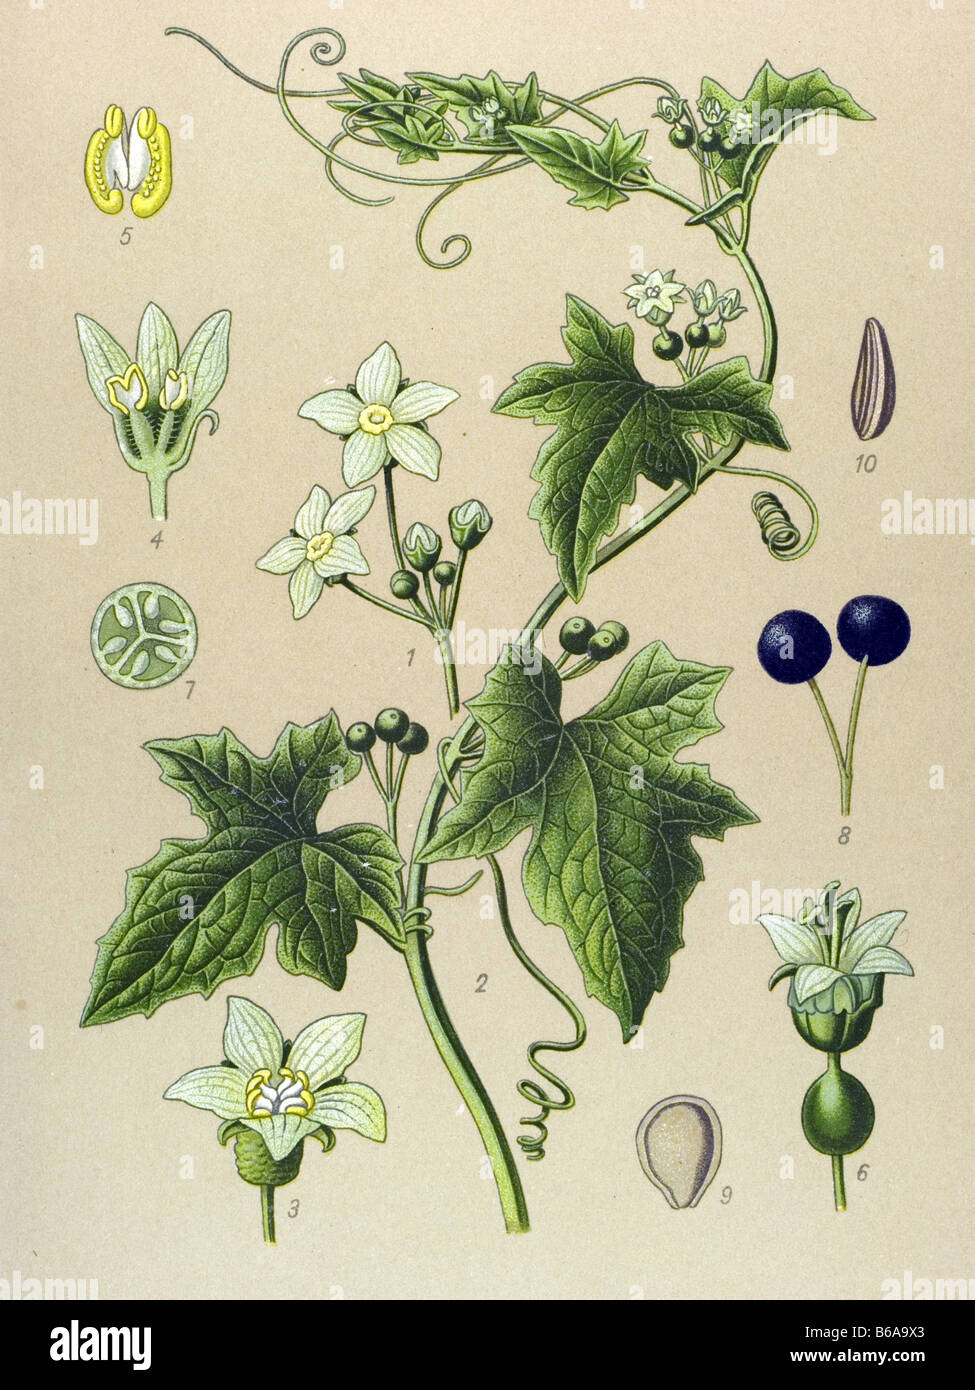 White briony, Bryonia alba poisonous plants illustrations Stock Photo